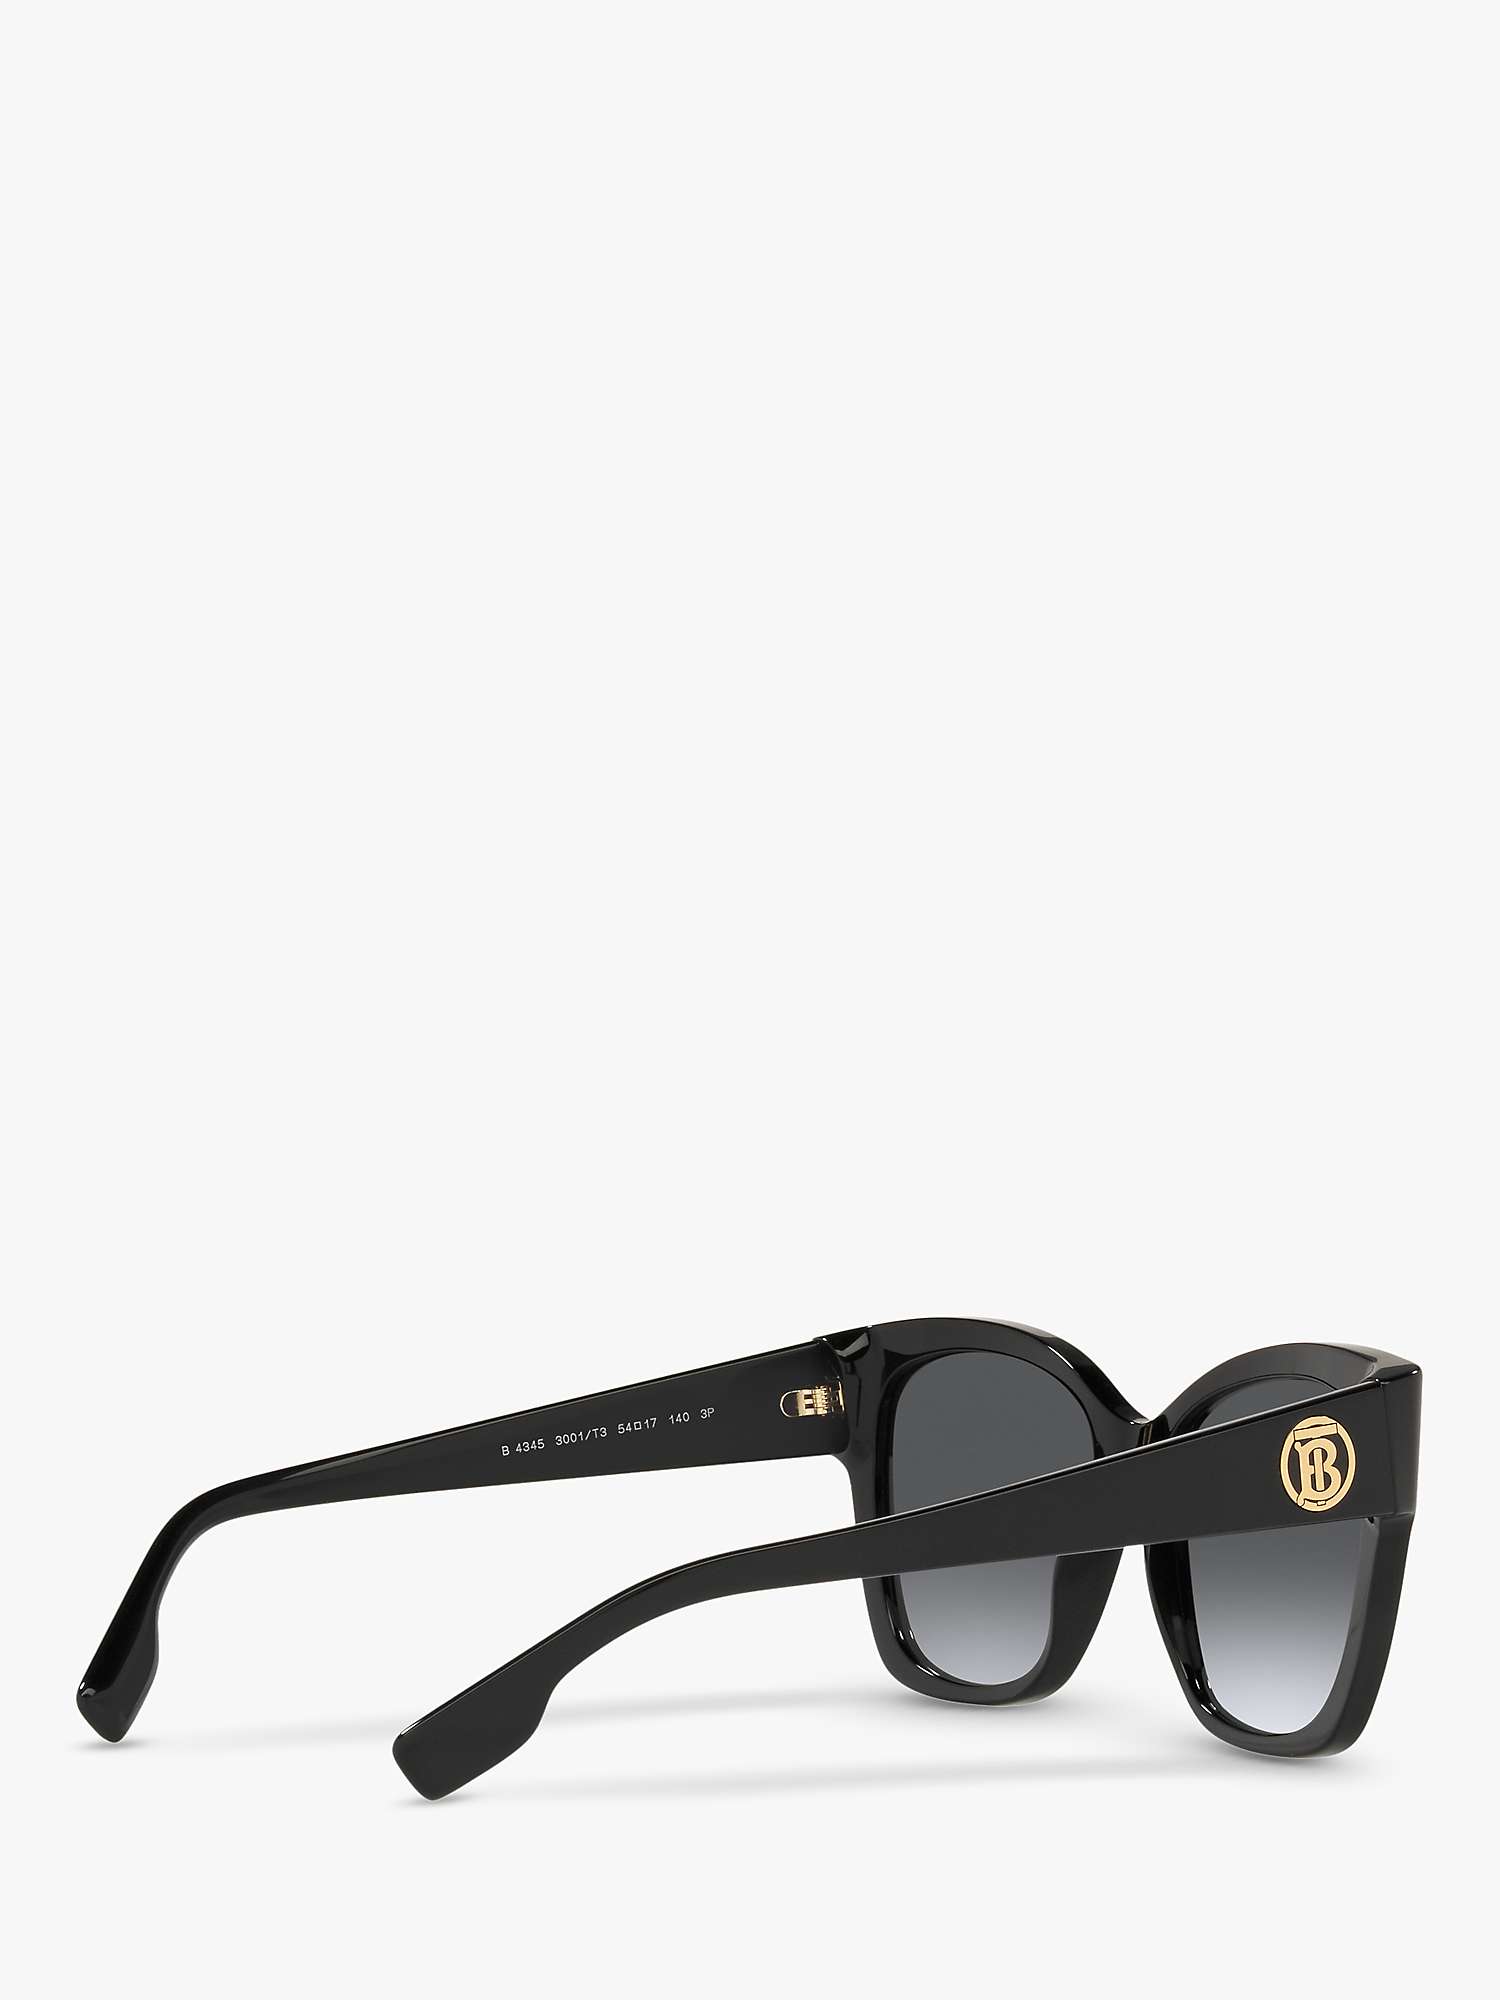 Buy Burberry BE4345 Women's Ruth Polarised Square Sunglasses, Black/Grey Gradient Online at johnlewis.com